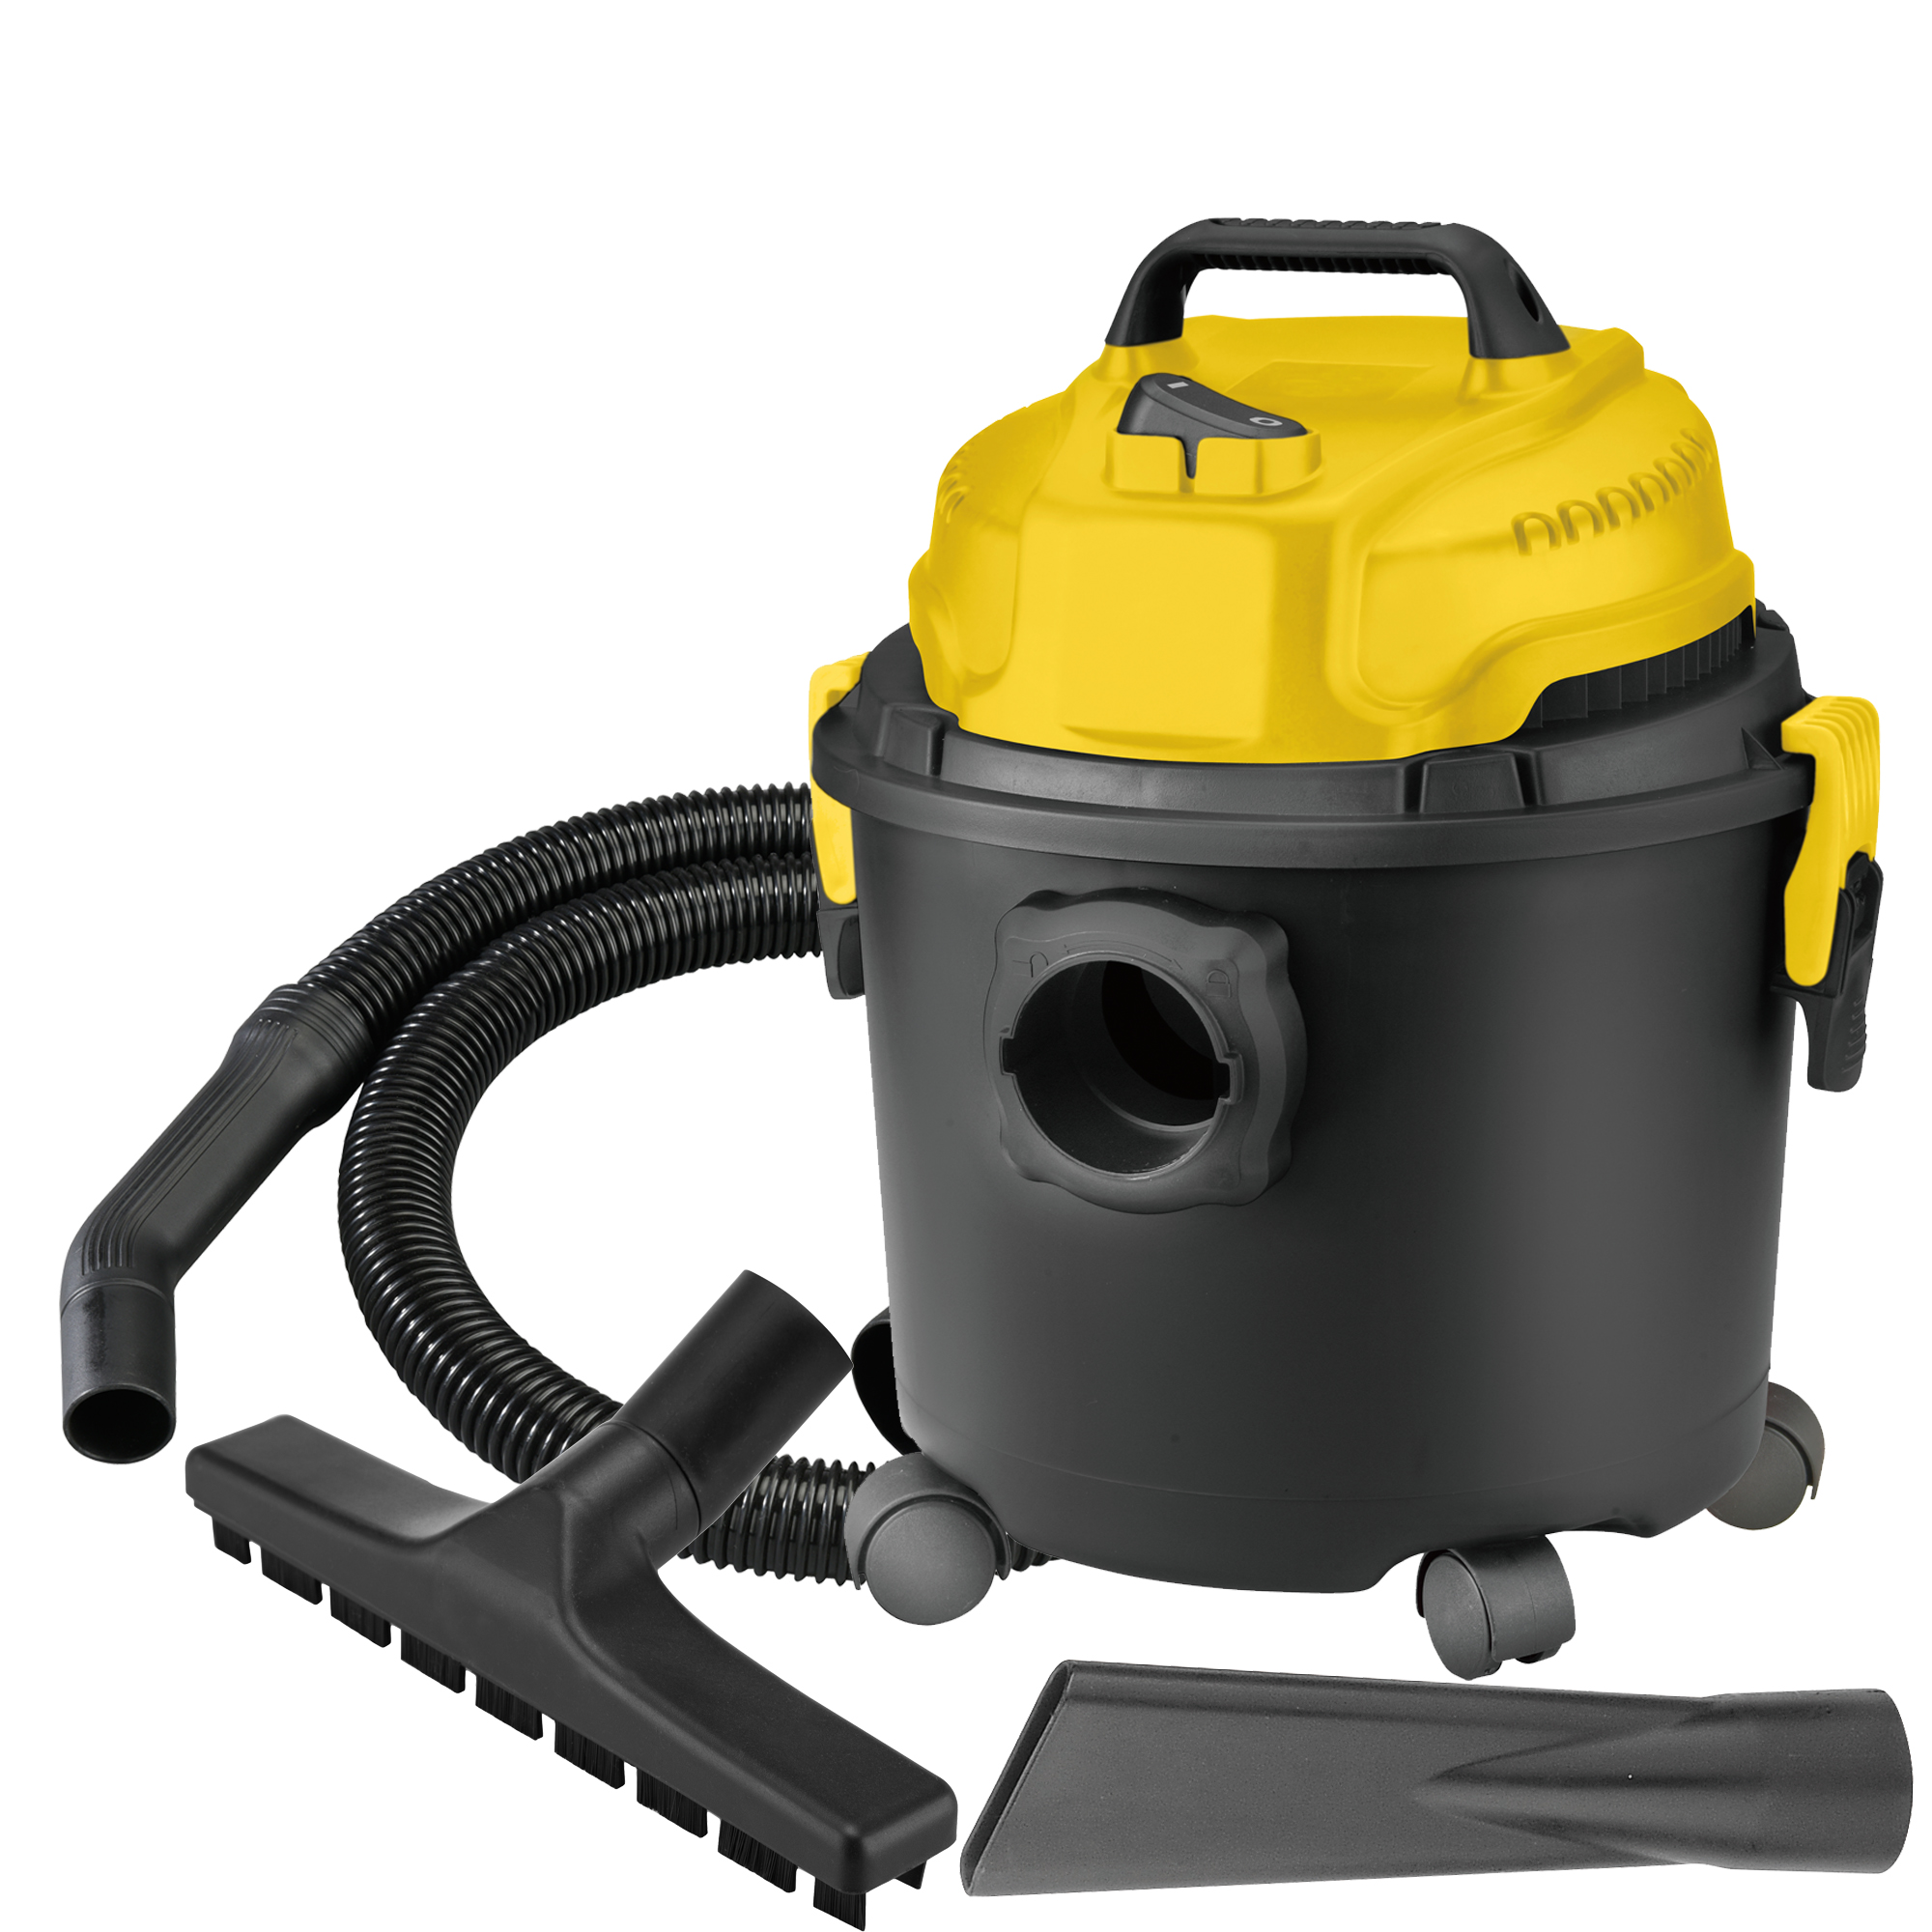 Herzberg HG-8019: Wet & Dry Vacuum Cleaner 1200W